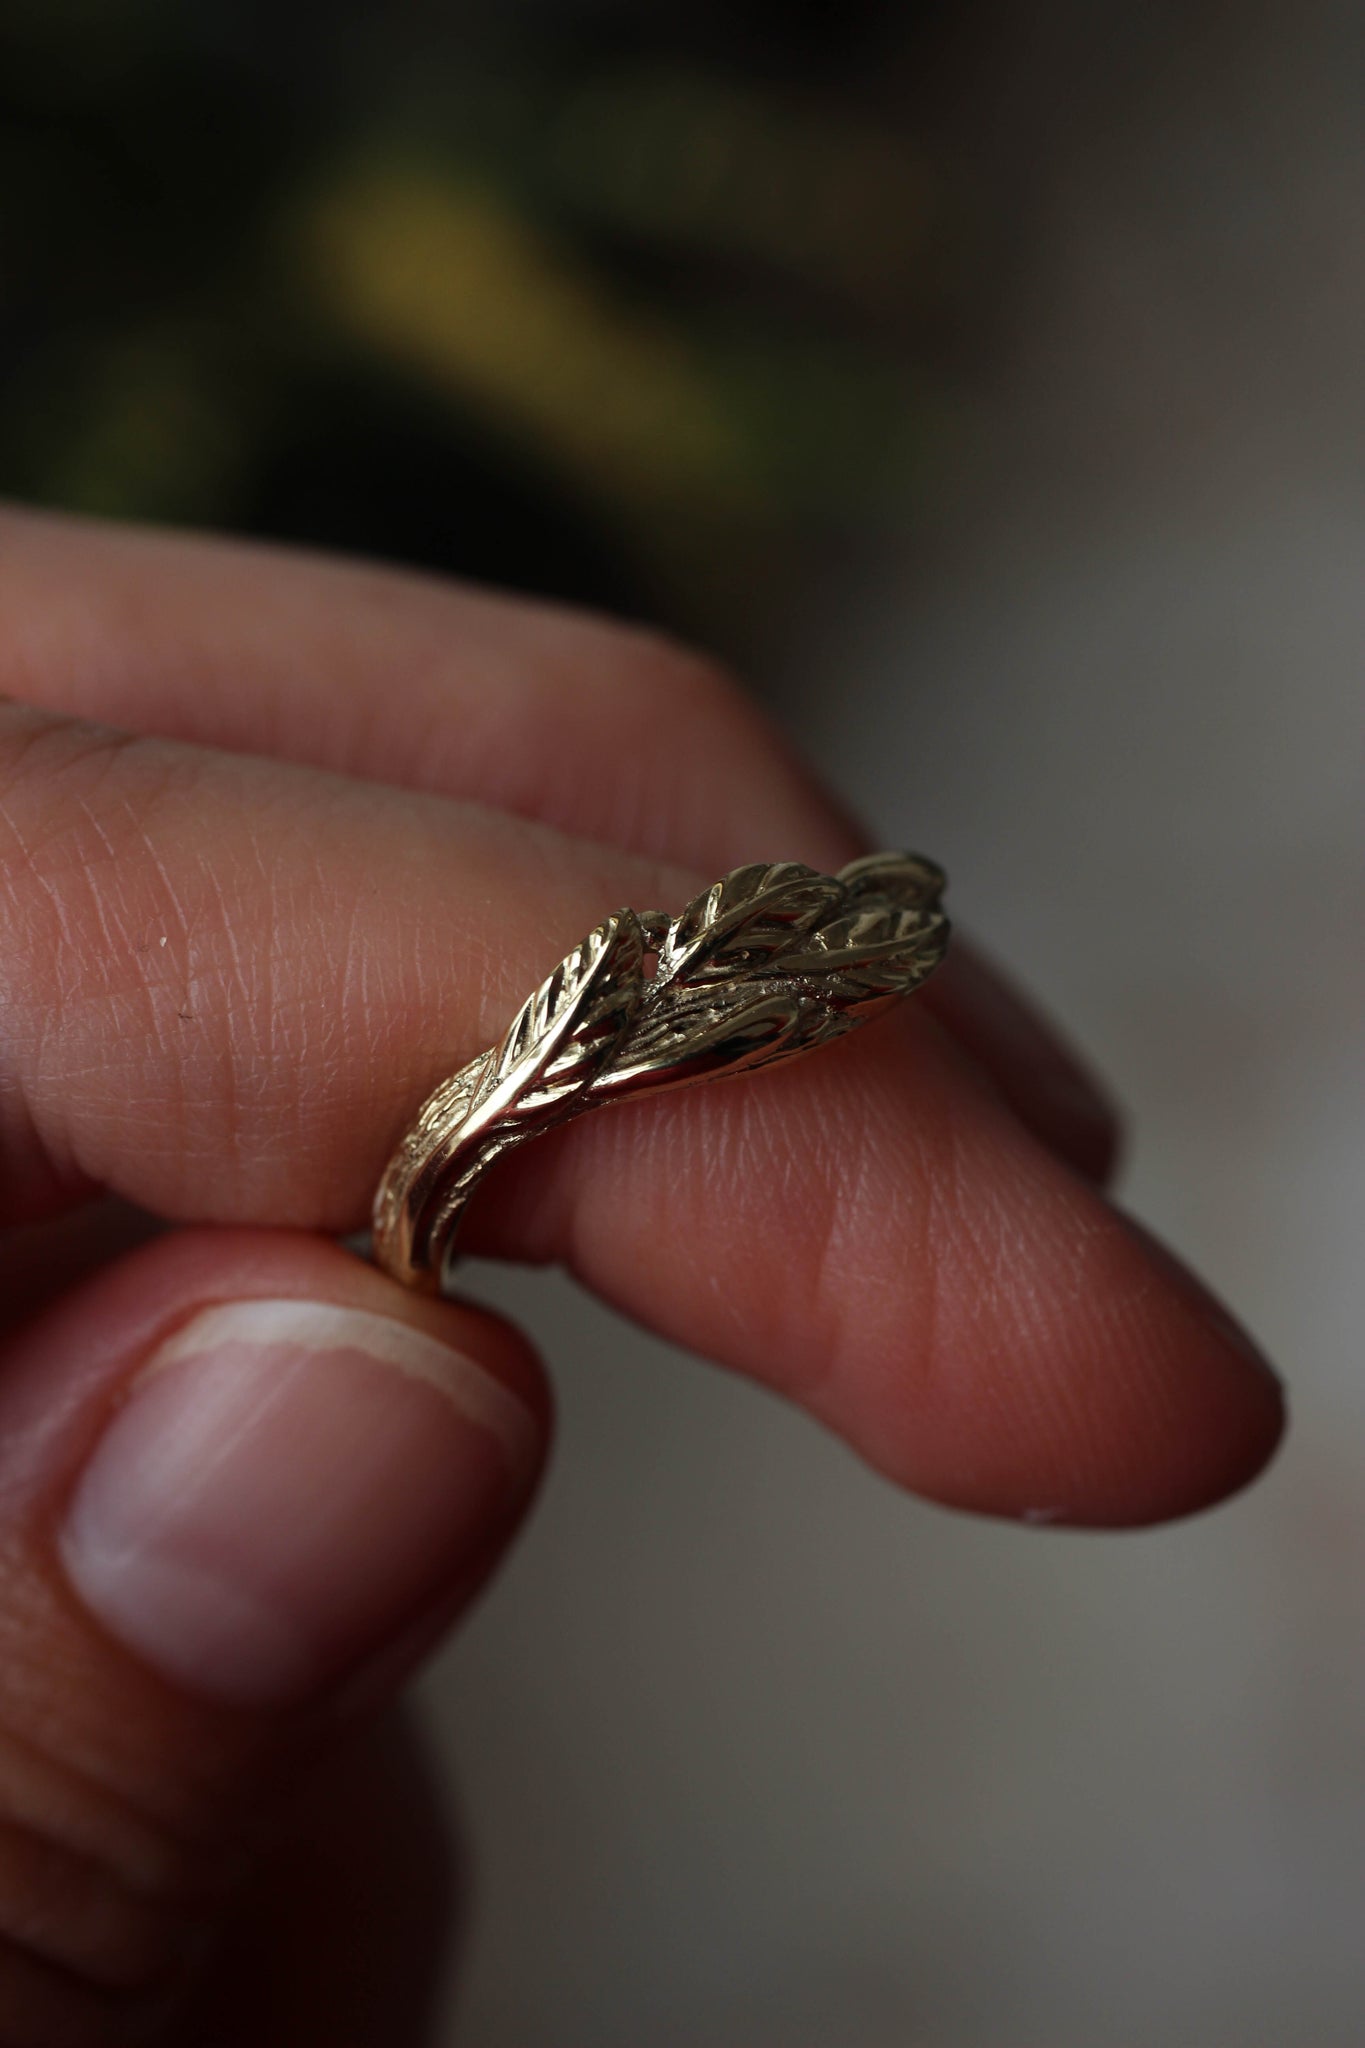 Tree branch wedding band for man, unisex gold ring - Eden Garden Jewelry™